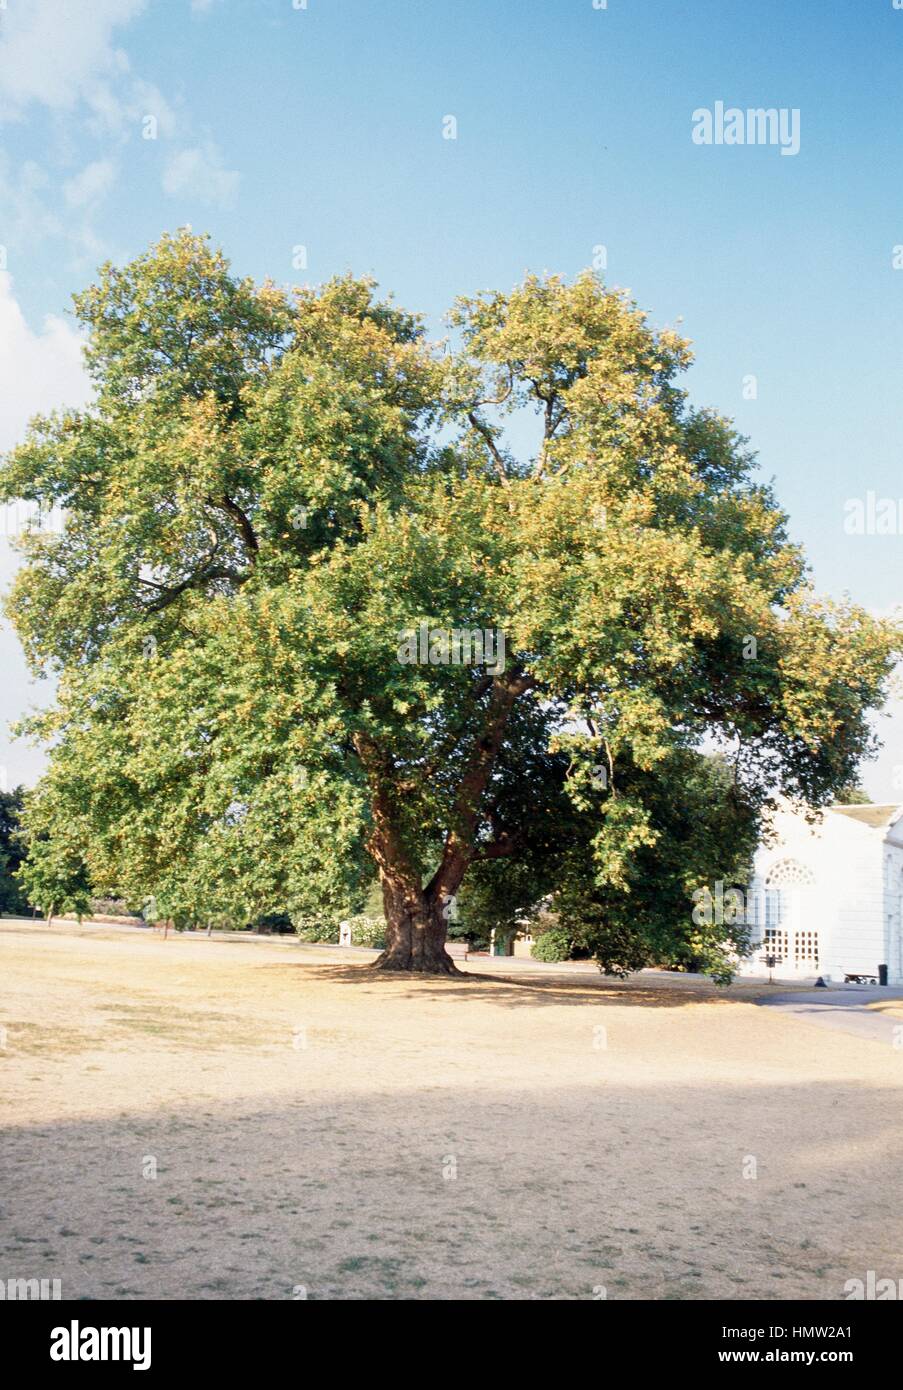 Turkey oak (Quercus cerris), Fagaceae. Stock Photo